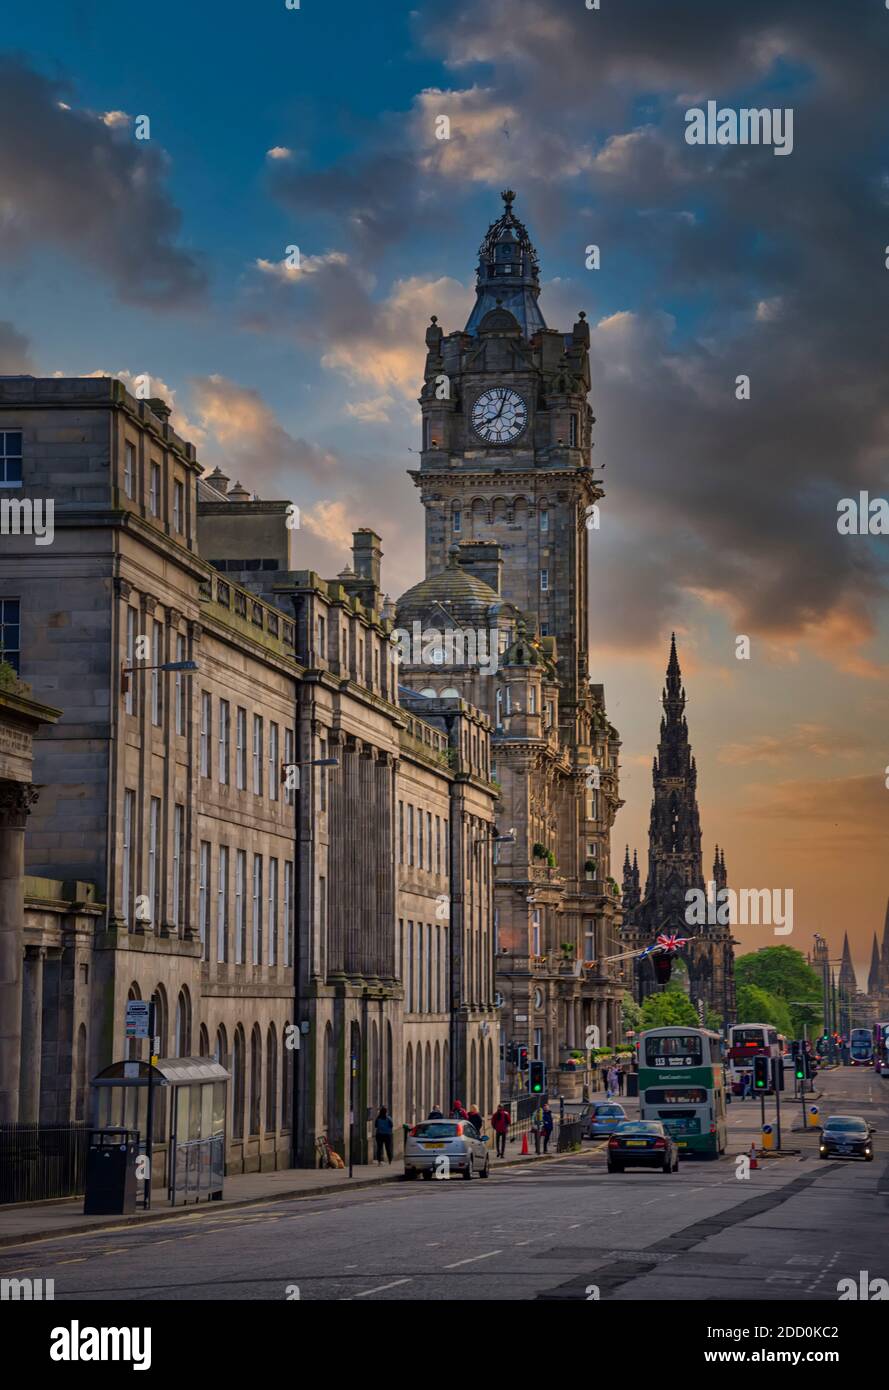 The Balmoral Hotel Clock Tower in Edinburgh, Scotland, UK Stock Photo